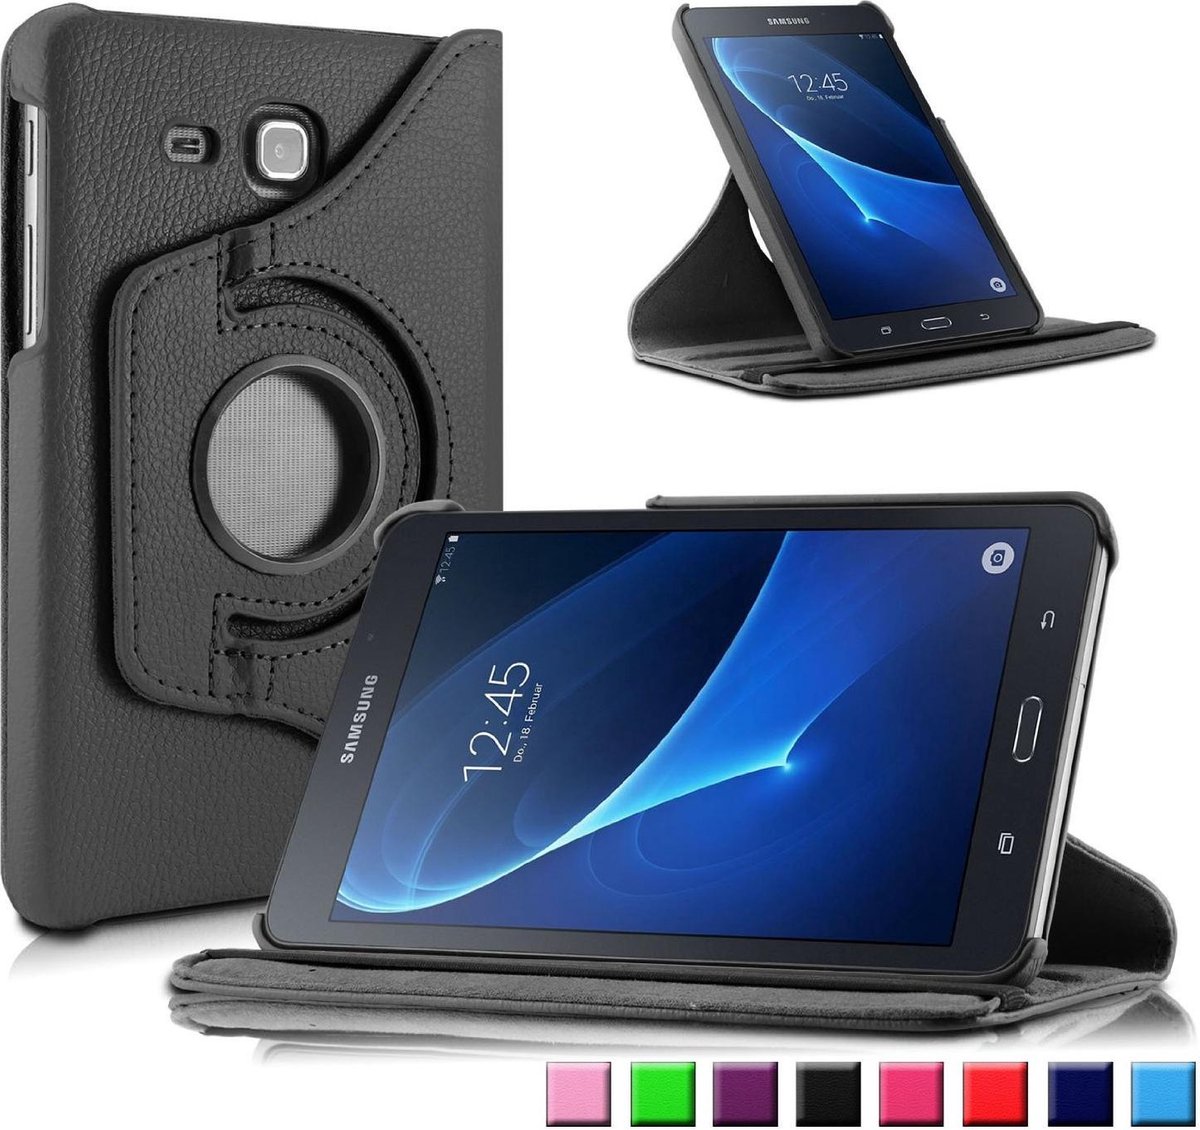 Xssive Tablet Hoes Case Cover 360° draaibaar voor Samsung Galaxy Tab A 7 inch T280 T285 Zwart